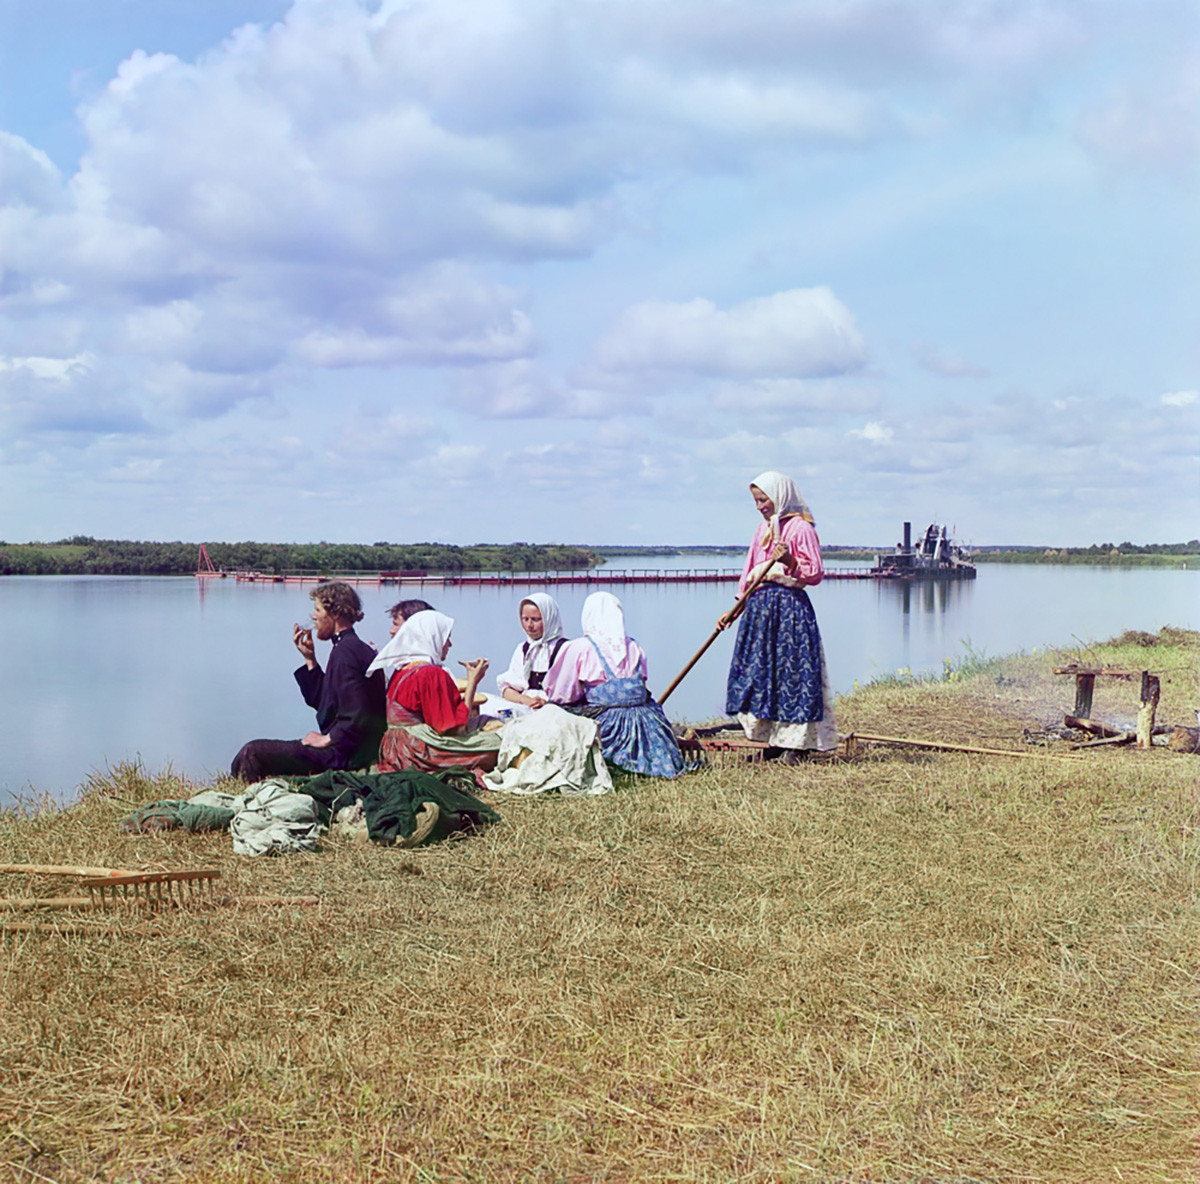 Cherepovets district. Peasants at tea break during hay gathering on island in Sheksna River. Background: dredging barge for navigation channel. Summer 1909